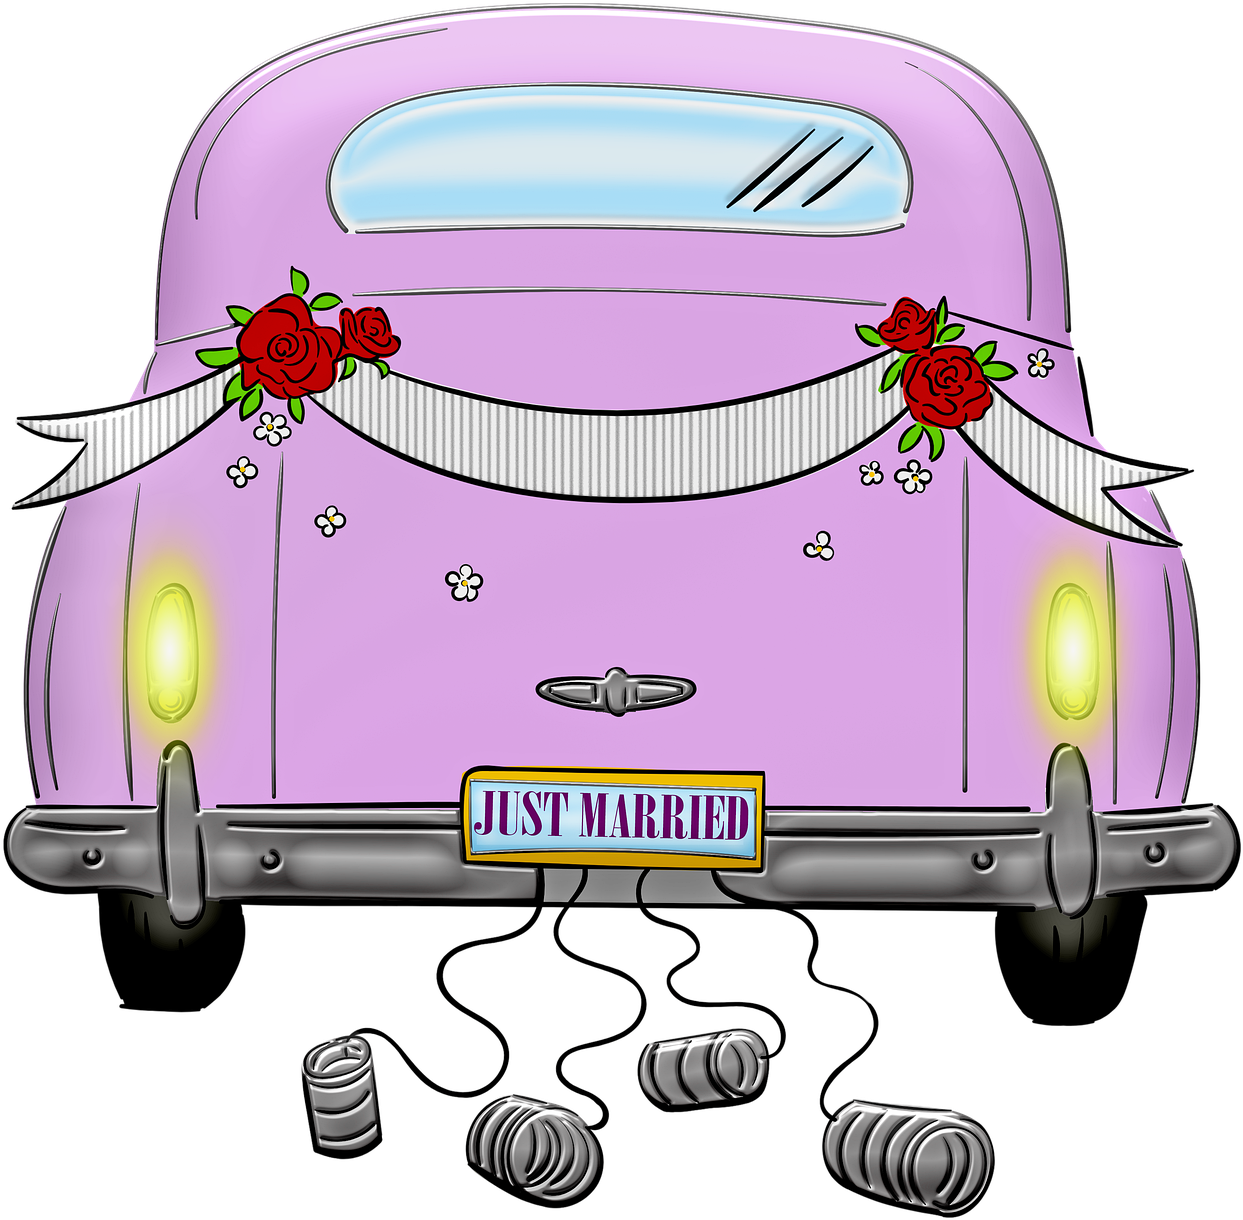 A Cartoon Of A Pink Car